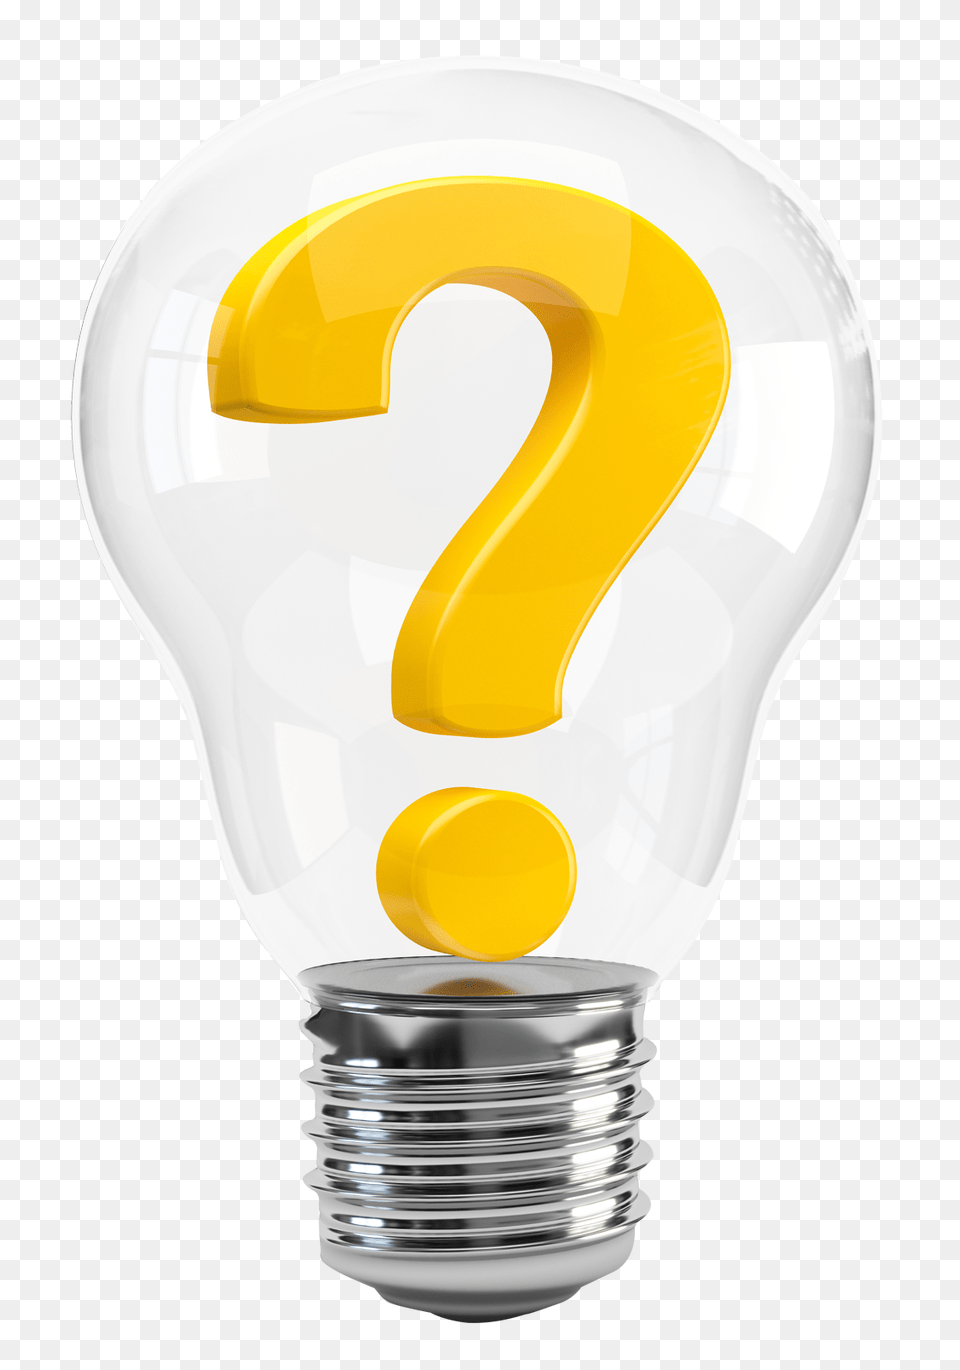 Pngpix Com Light Bulb With Question Mark, Lightbulb Png Image